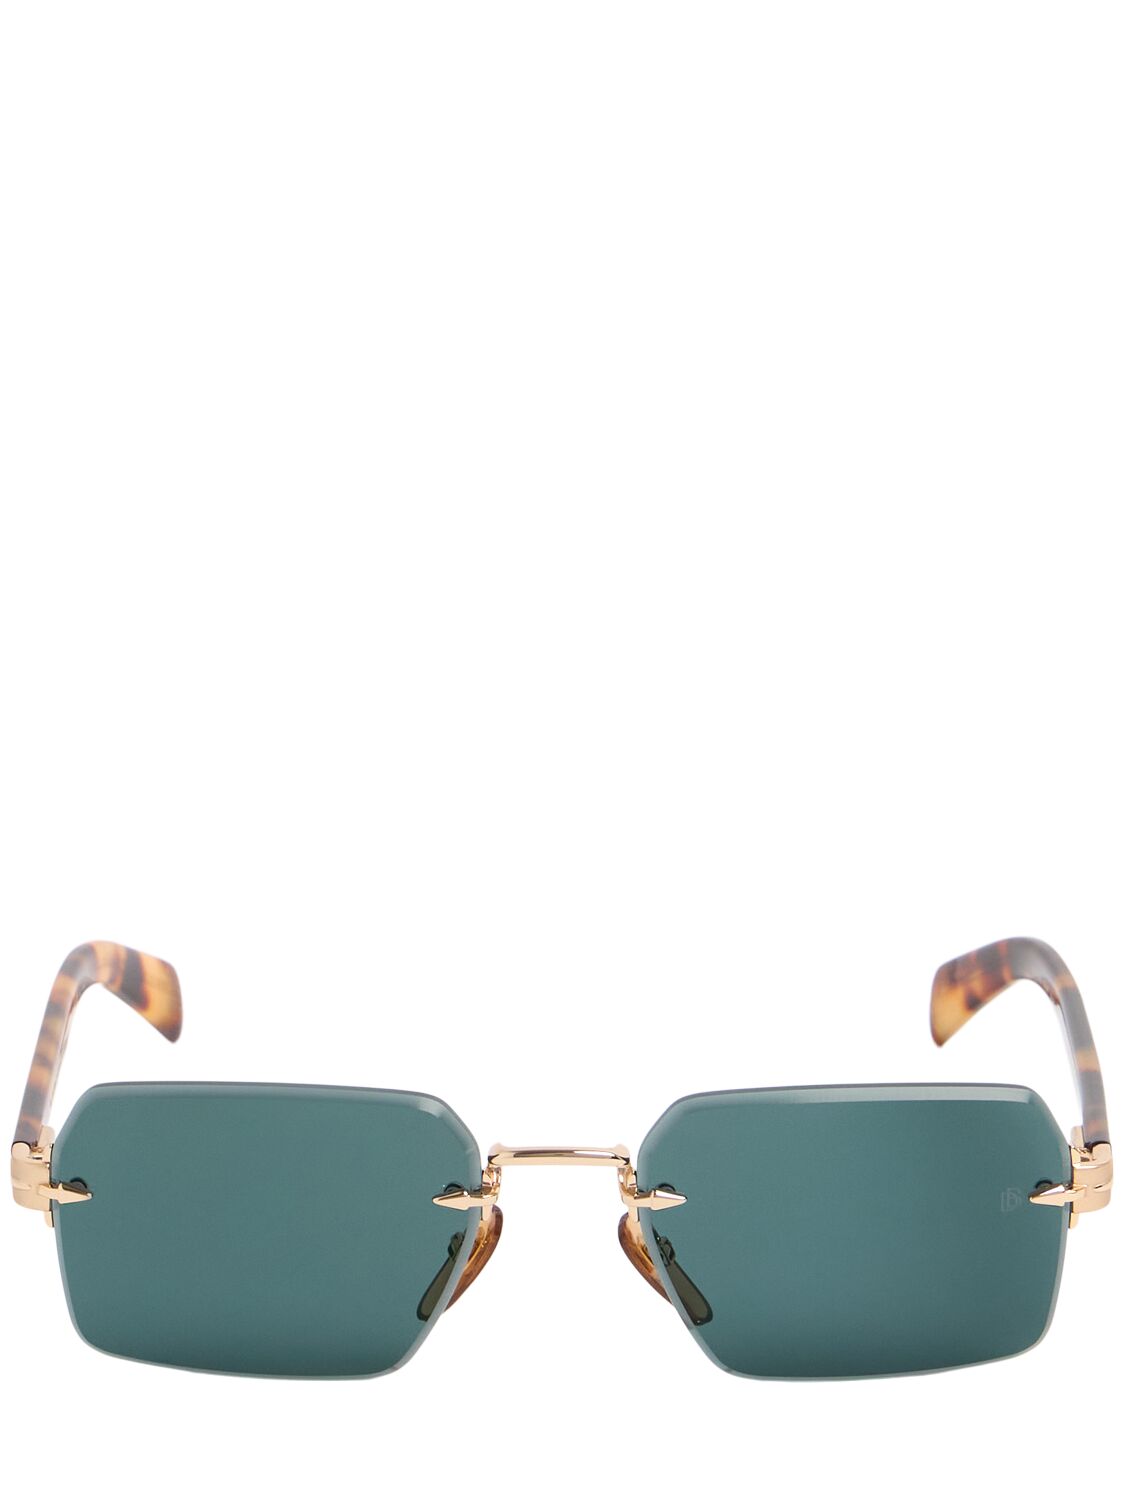 Db Eyewear By David Beckham Db Squared Metal Sunglasses In Gold/green